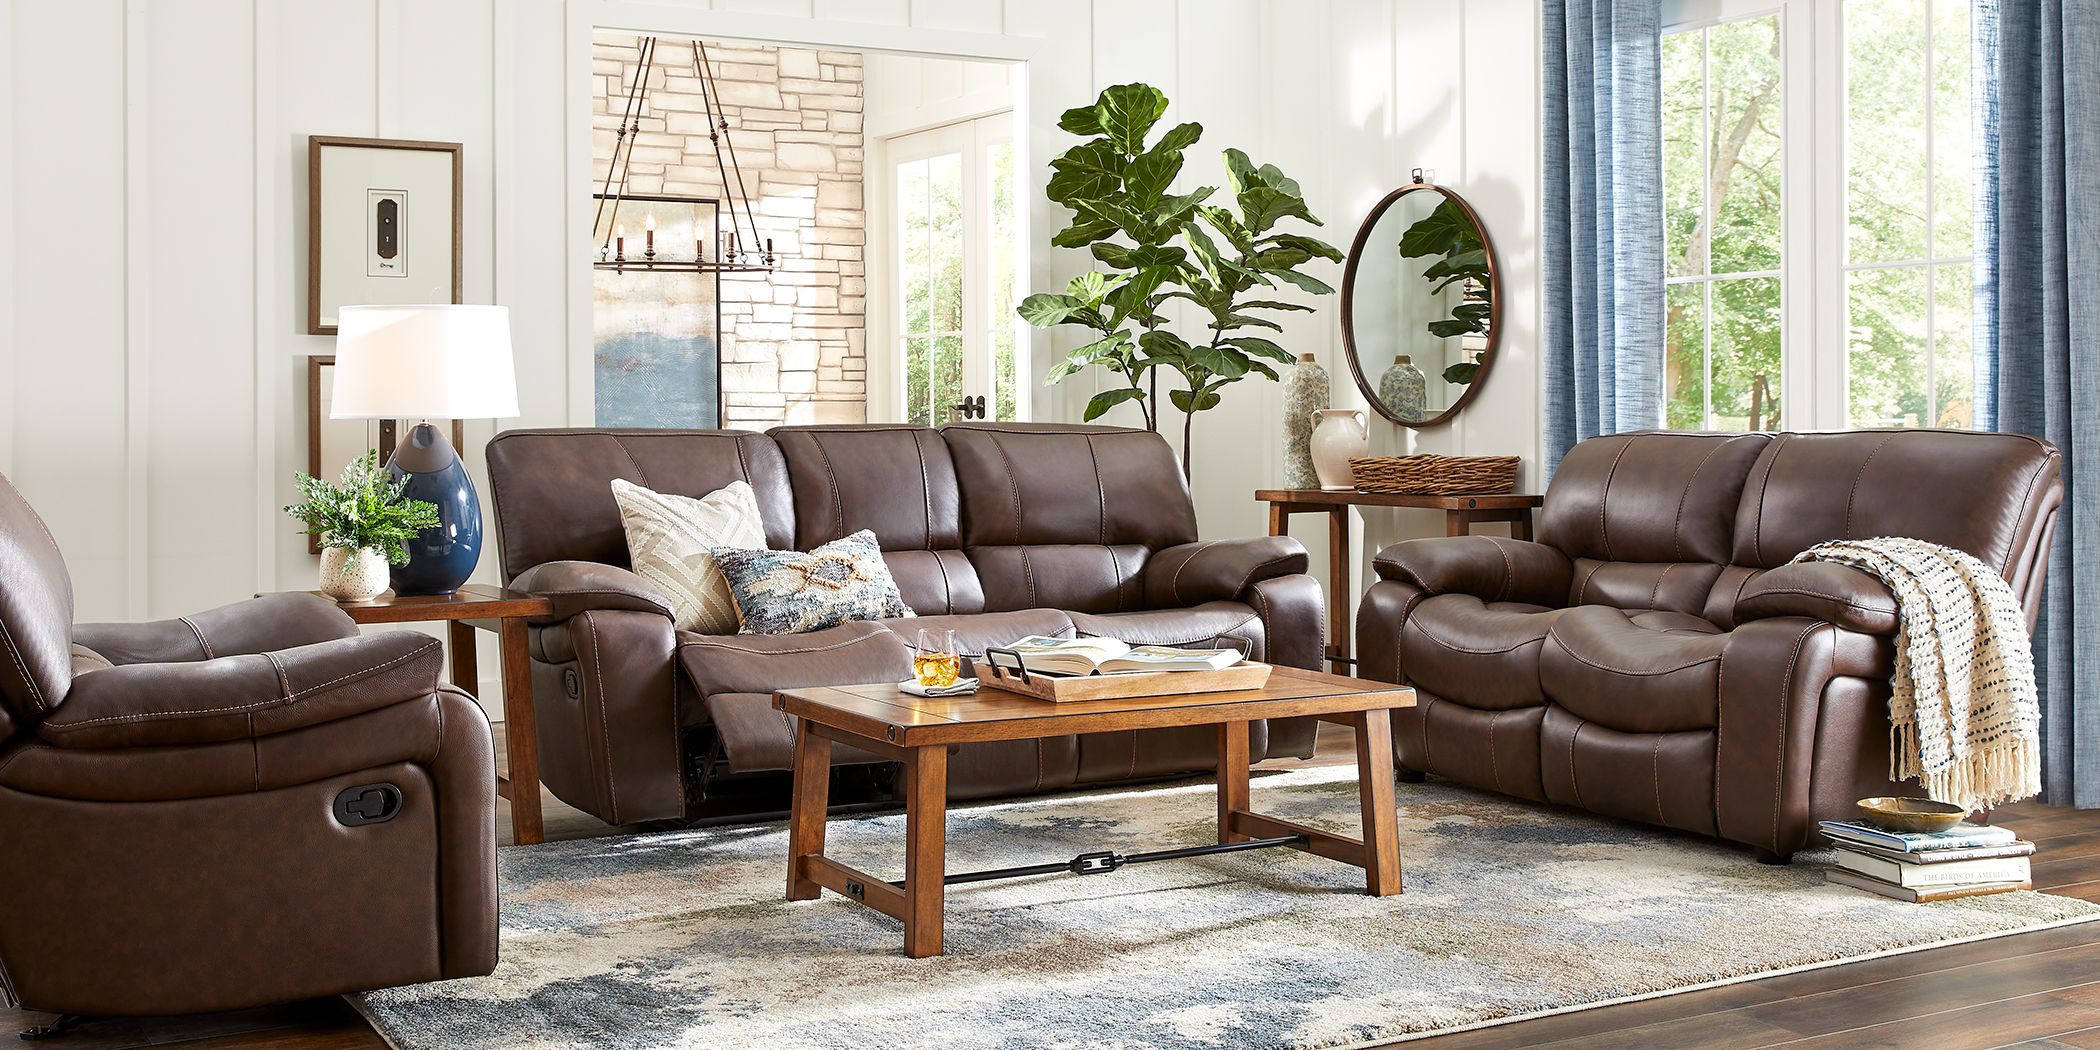 cindy crawford home furniture brown leather sofa